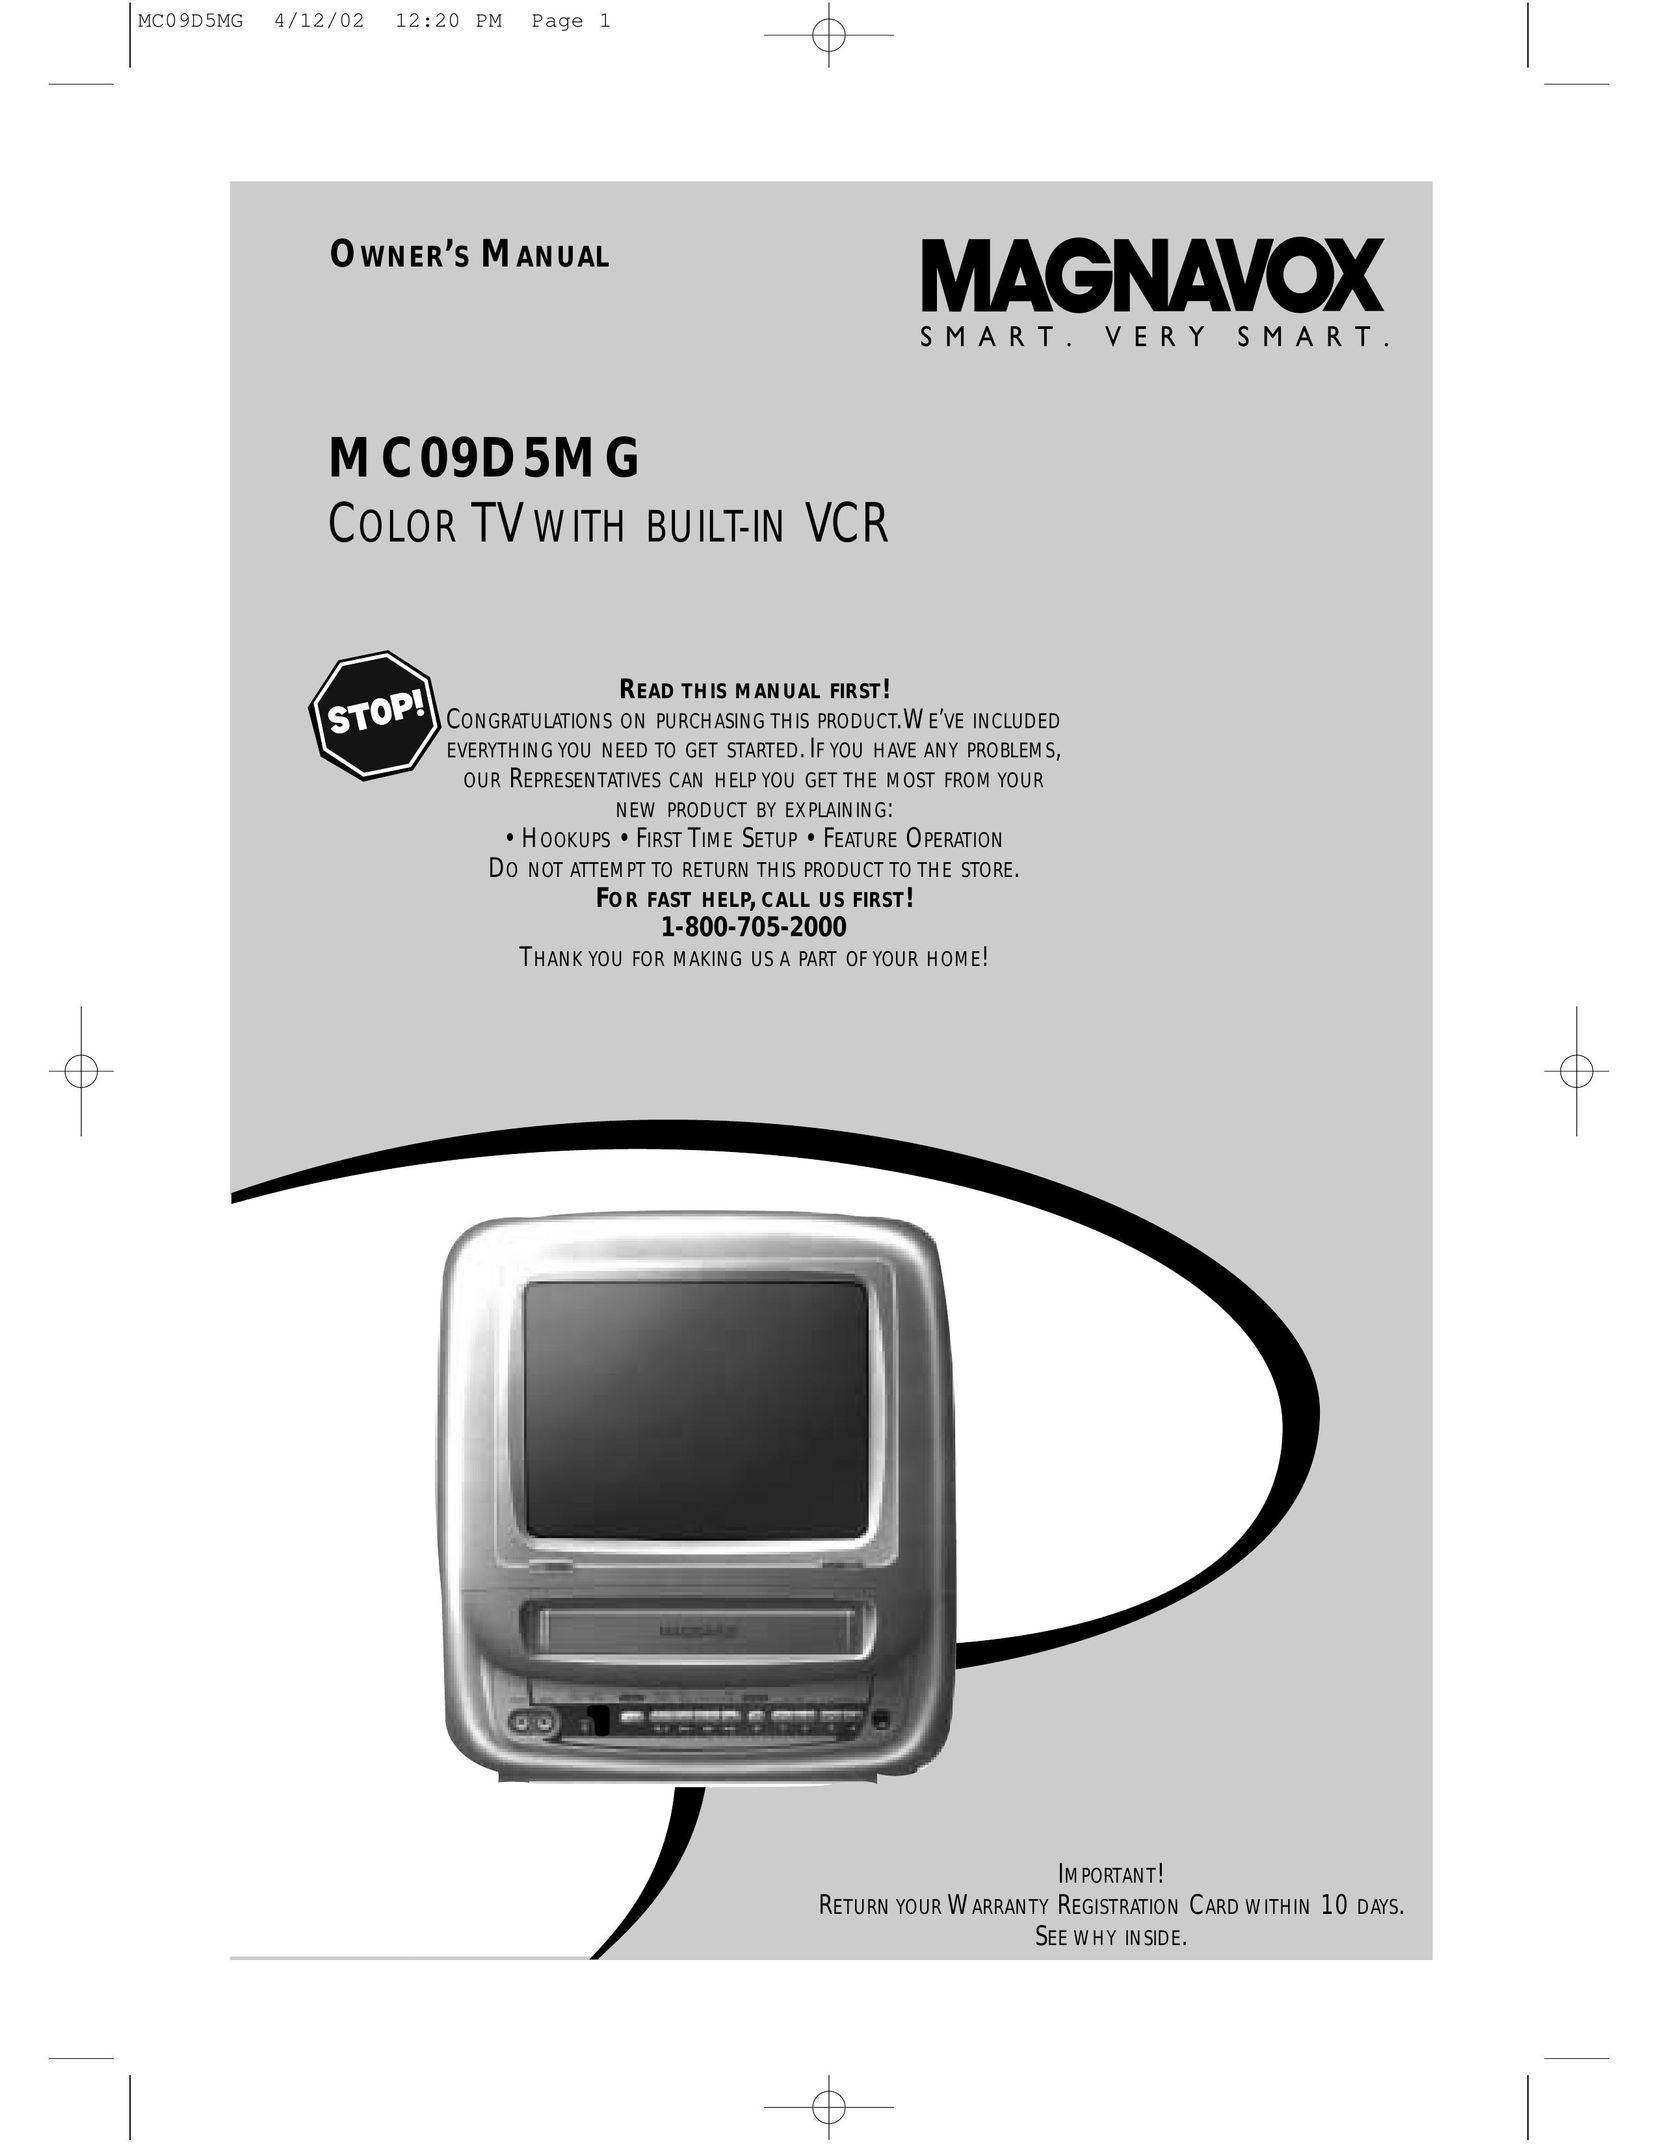 Magnavox MC09D5MG TV VCR Combo User Manual